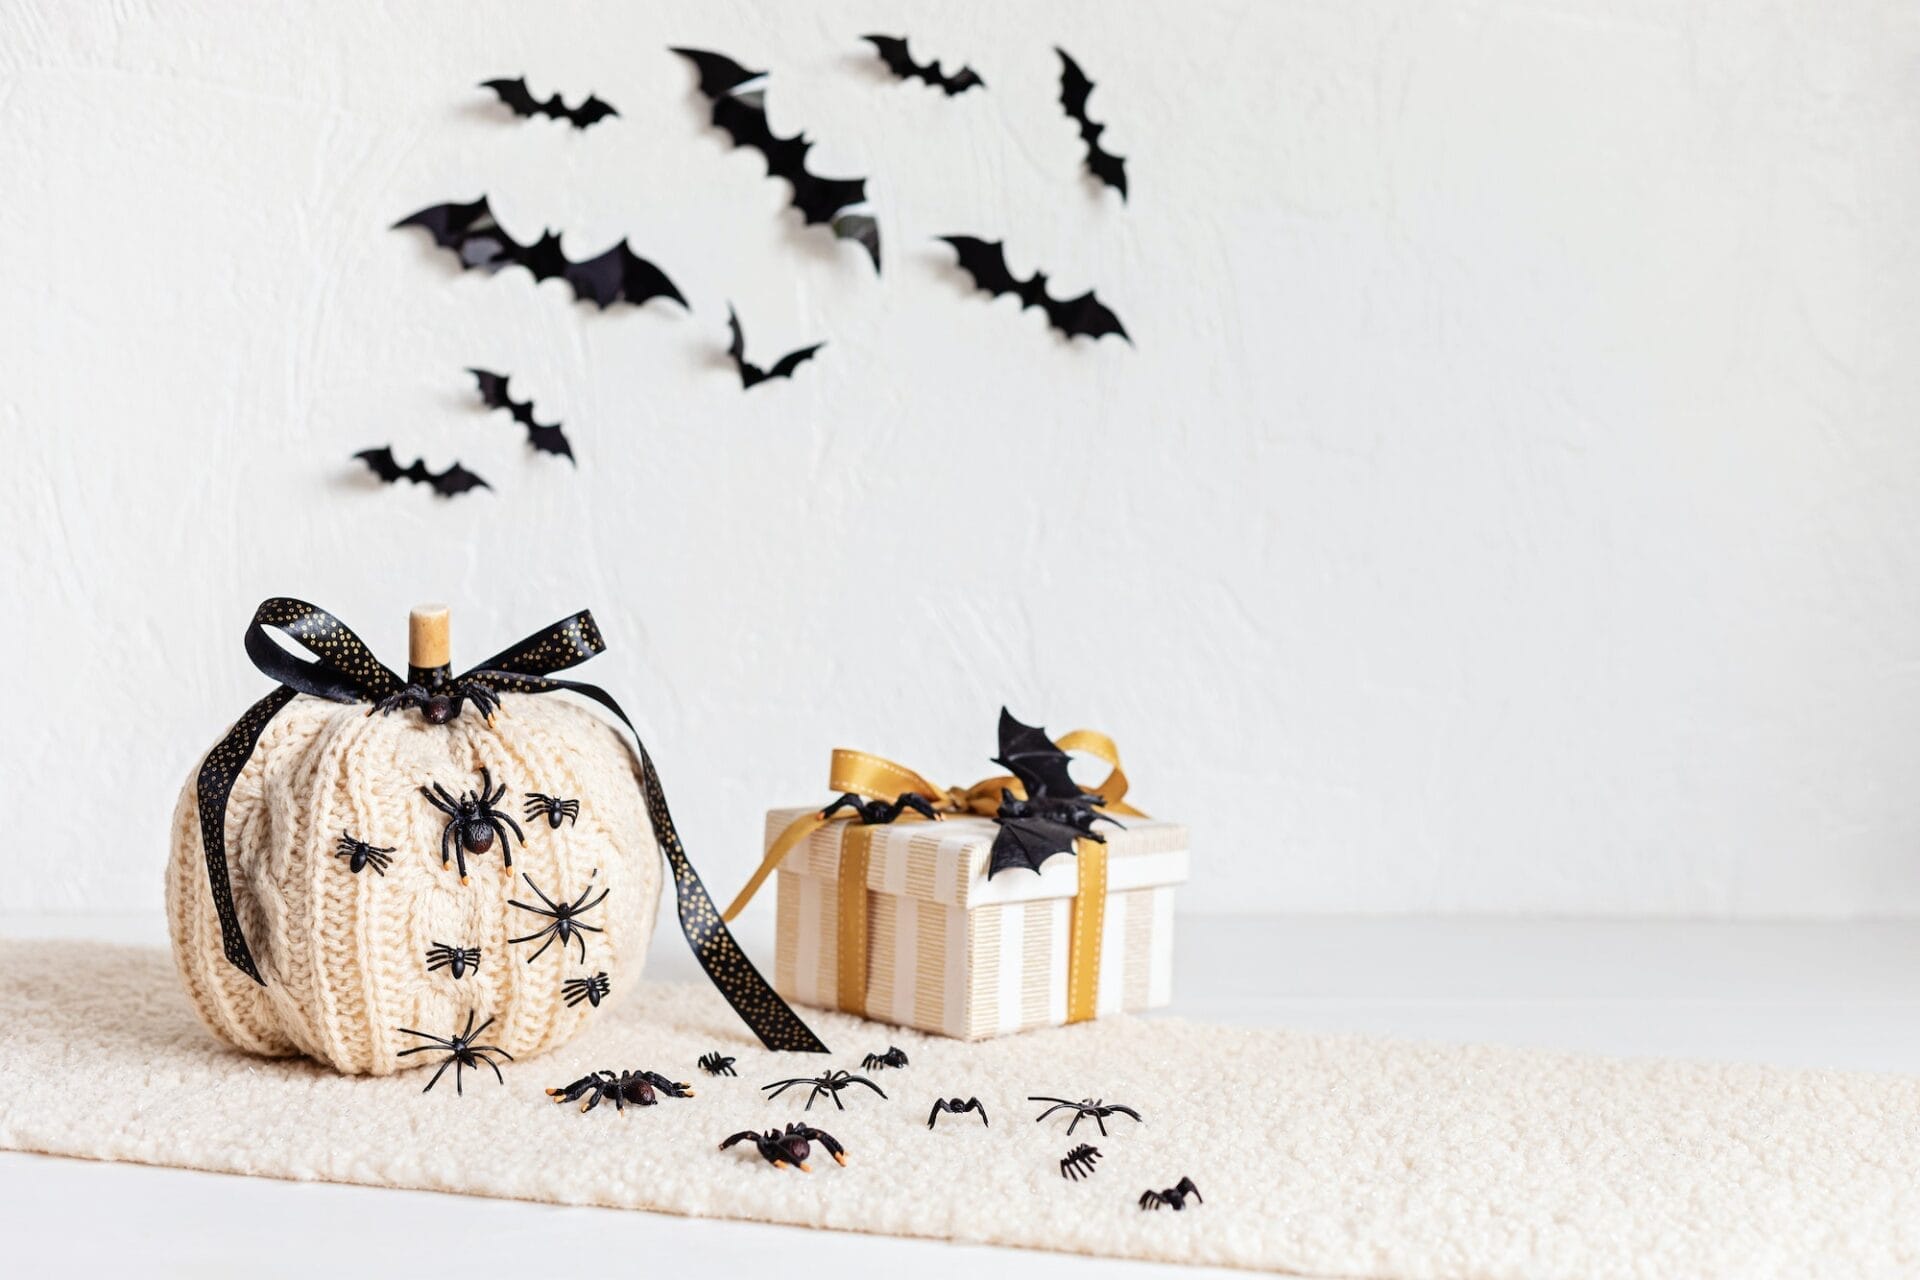 Interior decoration for halloween celebration with handmade knit pumpkin